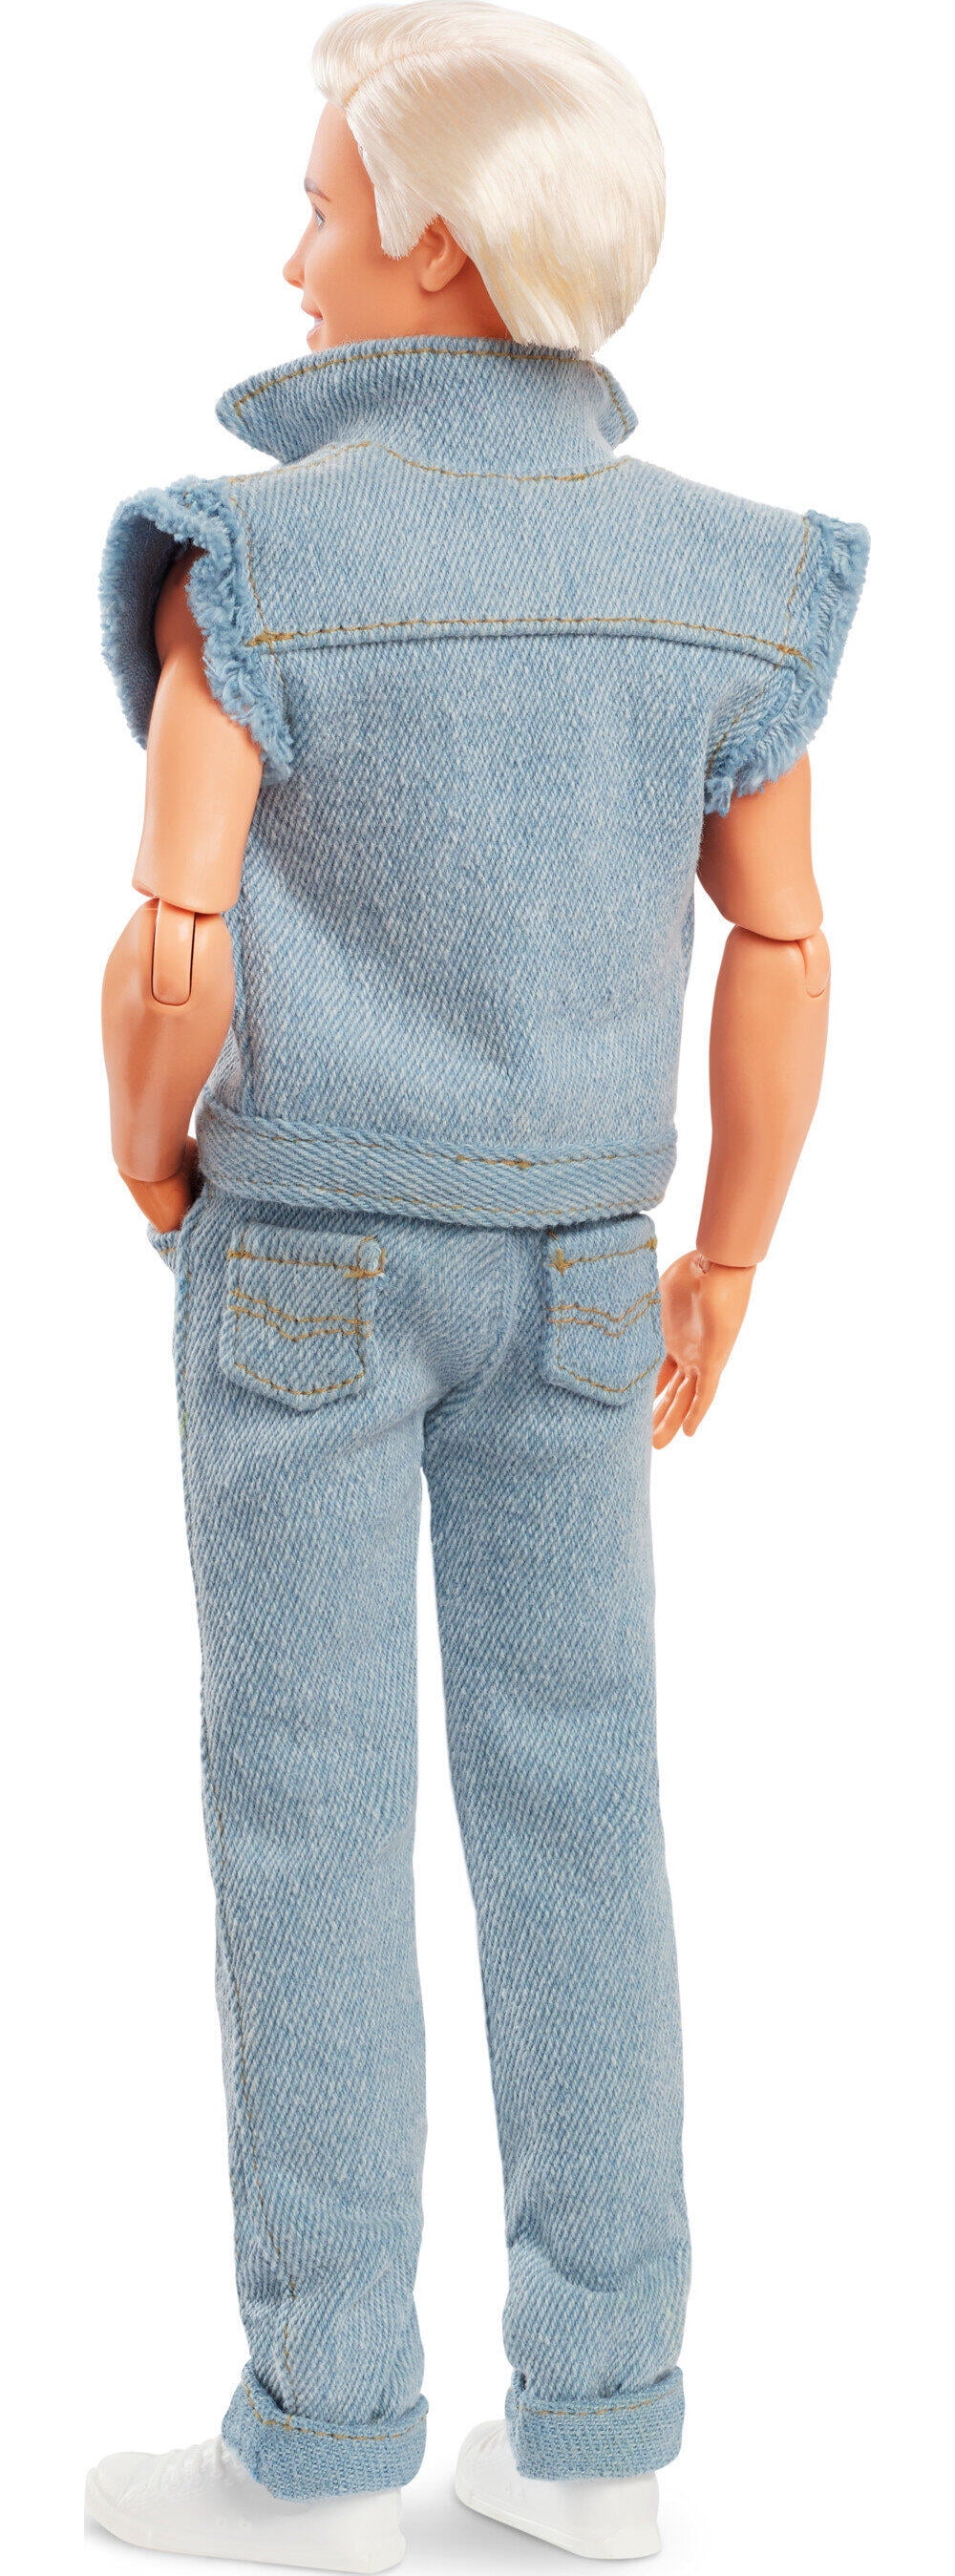 Barbie The Movie Collectible Doll Wearing Denim Set - Walmart.com